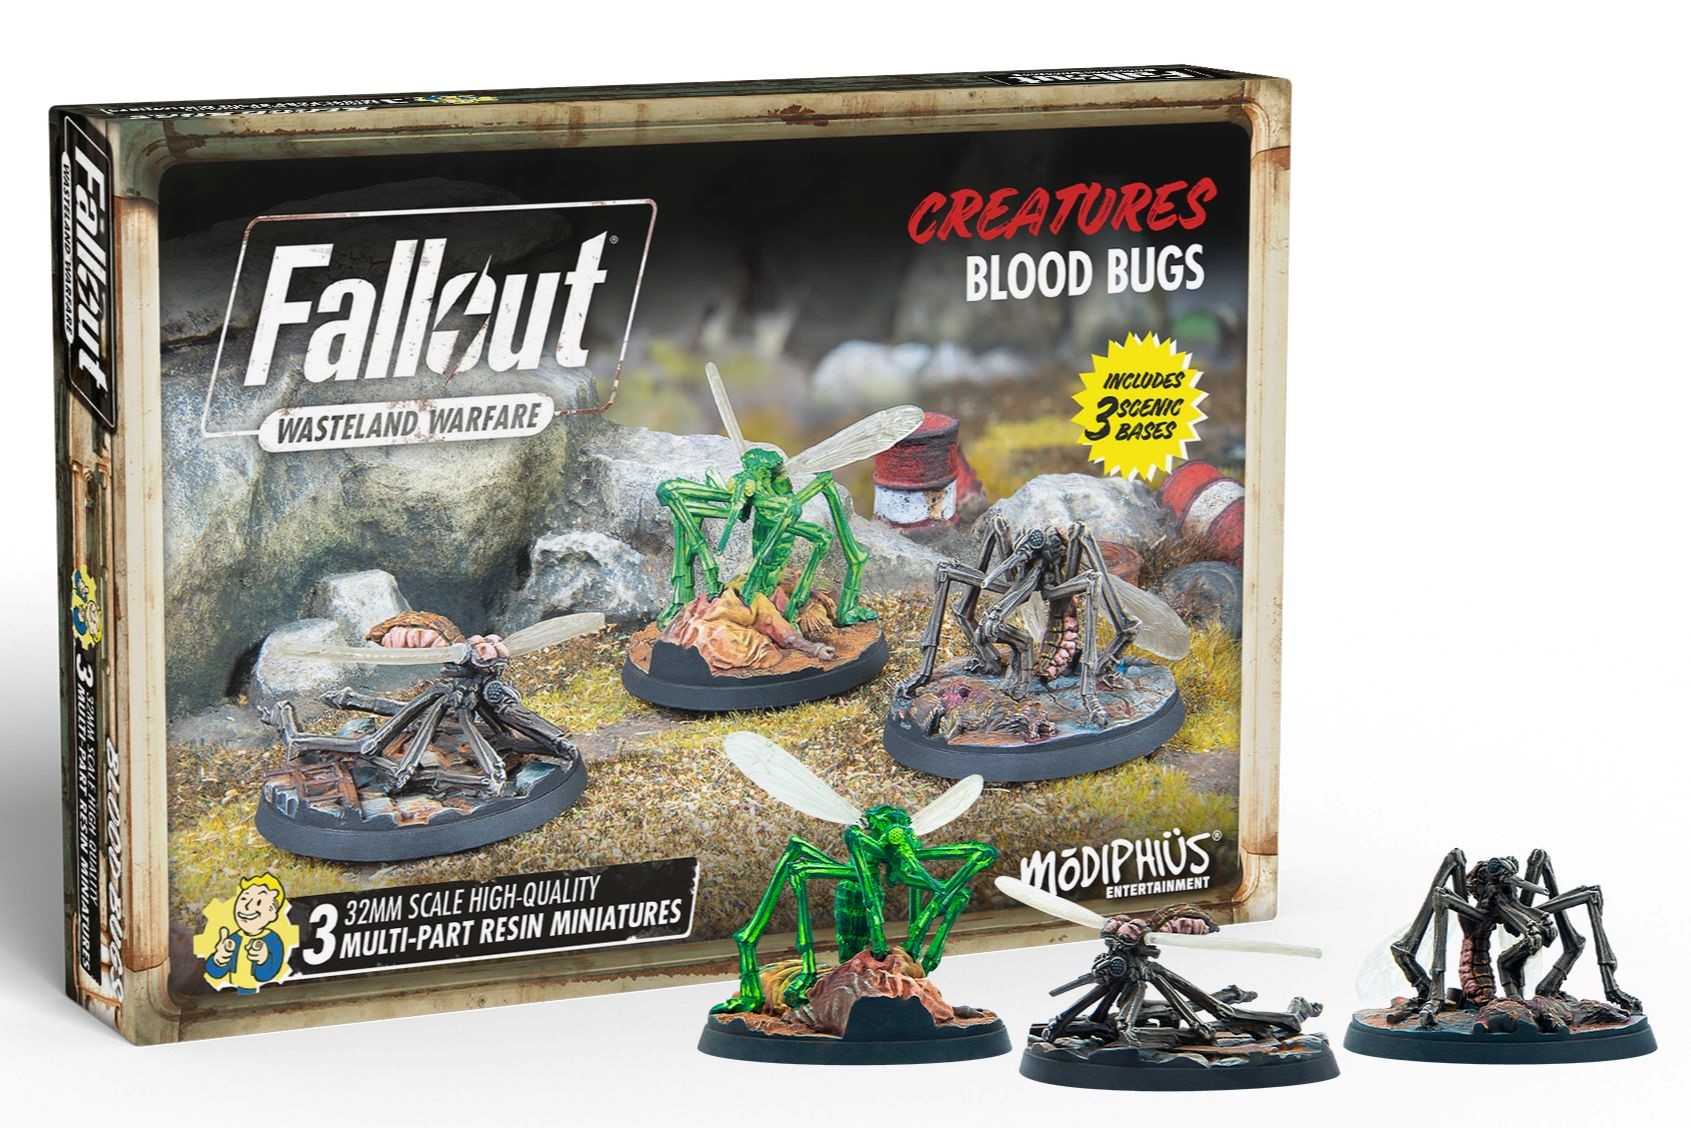 Fallout Wasteland Warfare: Creatures Blood Bugs 